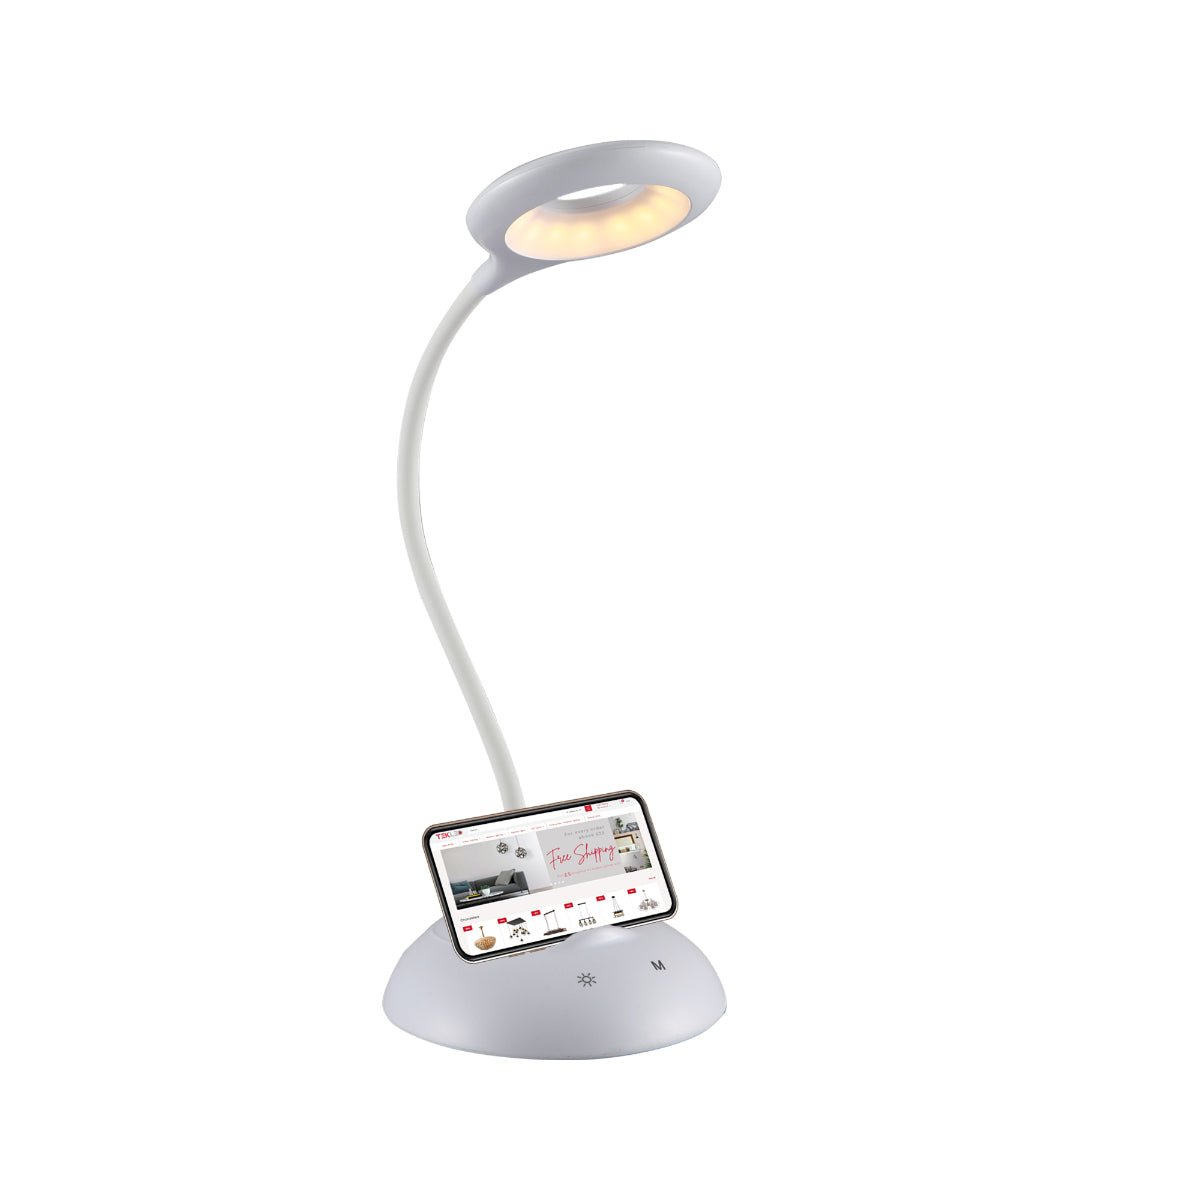 Main image of Ringo White Rechargable Desk Light 5 Dimmable and Colour Modes | TEKLED 130-03600